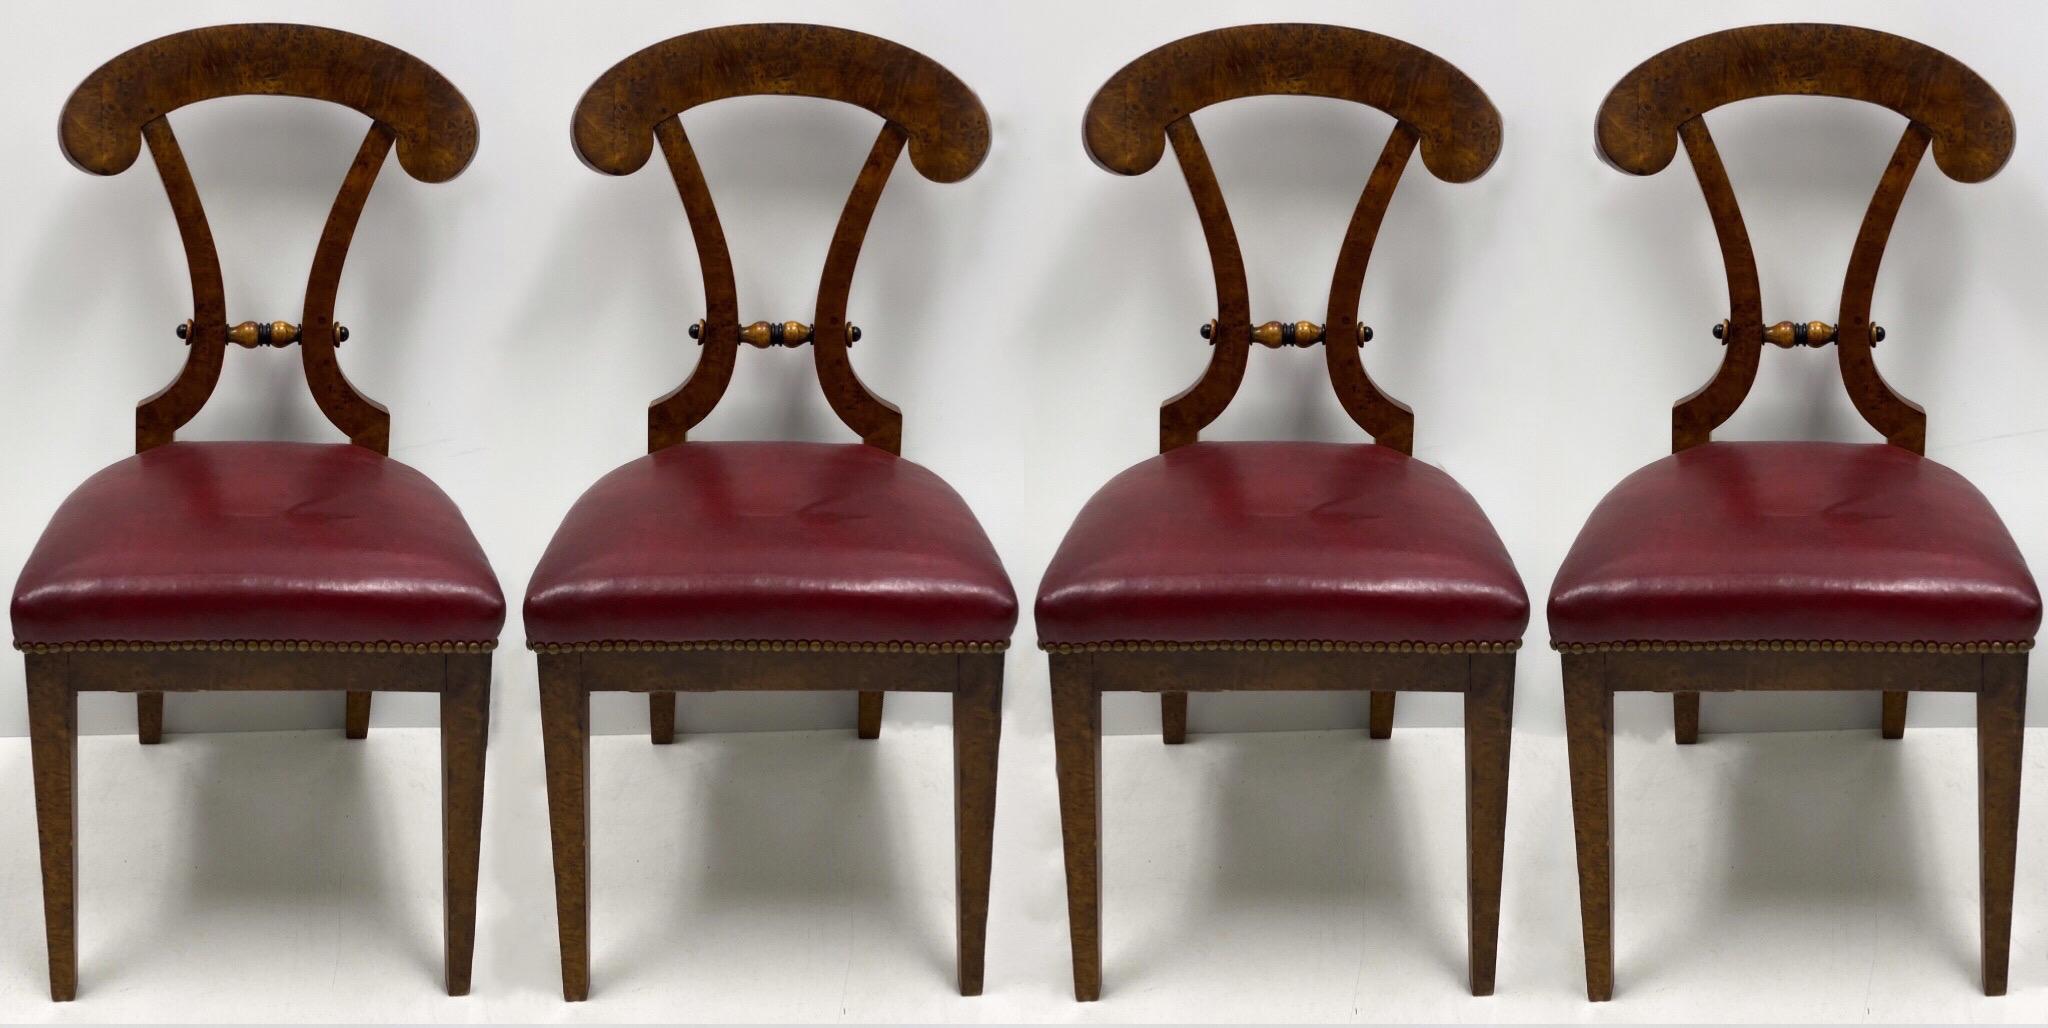 German Art Deco Biedermeier Burlwood and Leather Chairs, Set of 4 For Sale